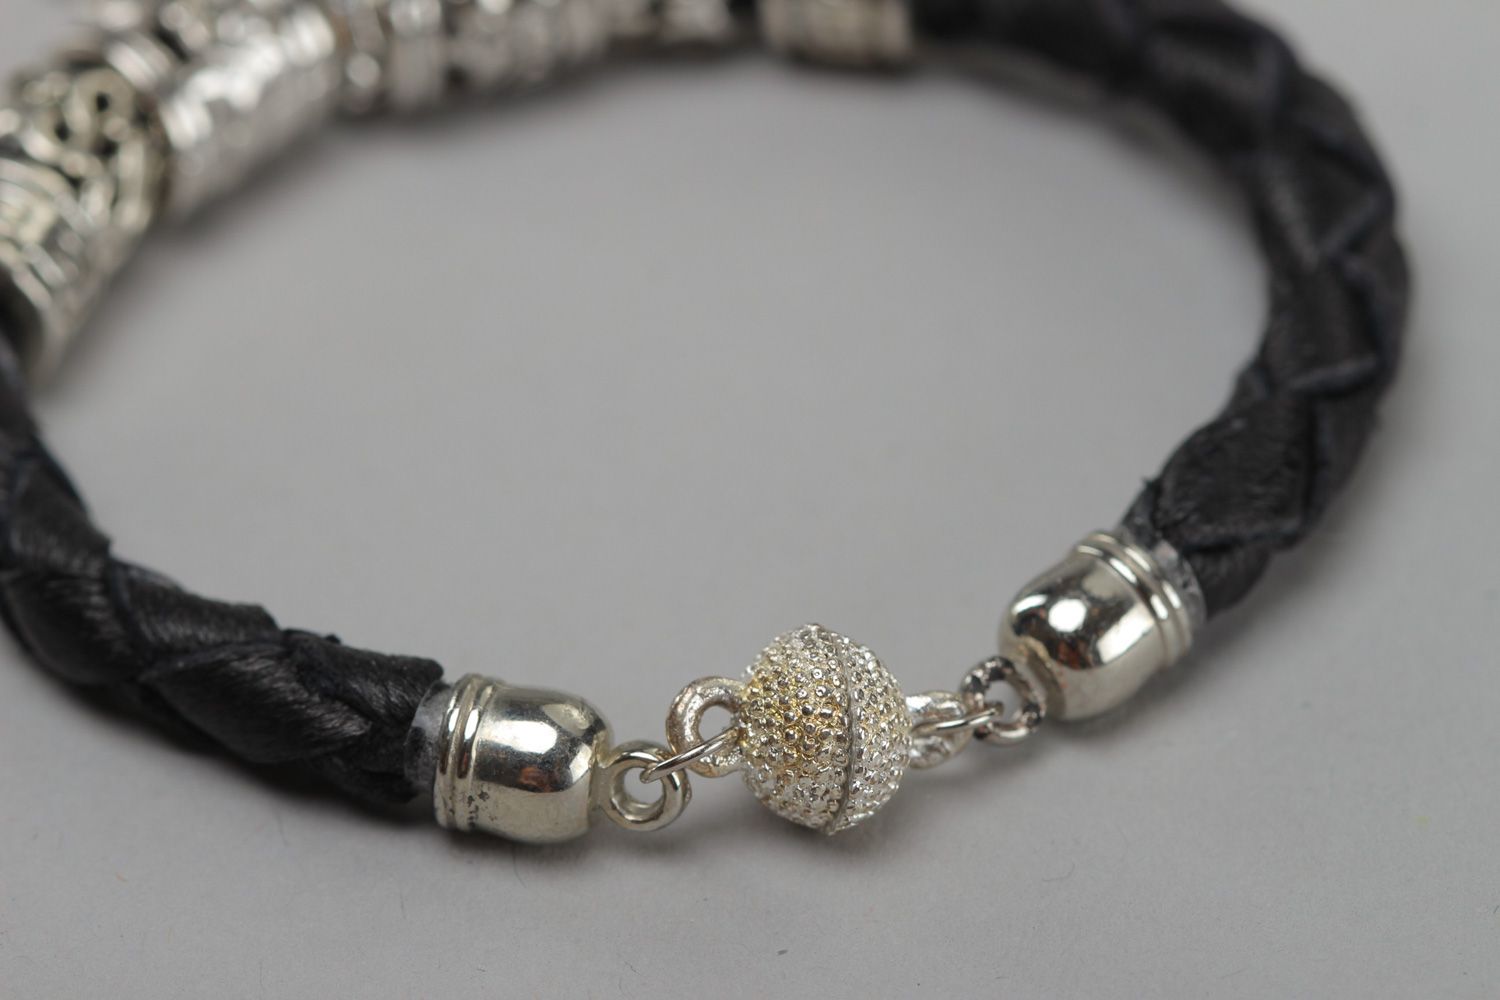 Handmade unisex wrist bracelet woven of genuine leather with metal charm angel photo 4